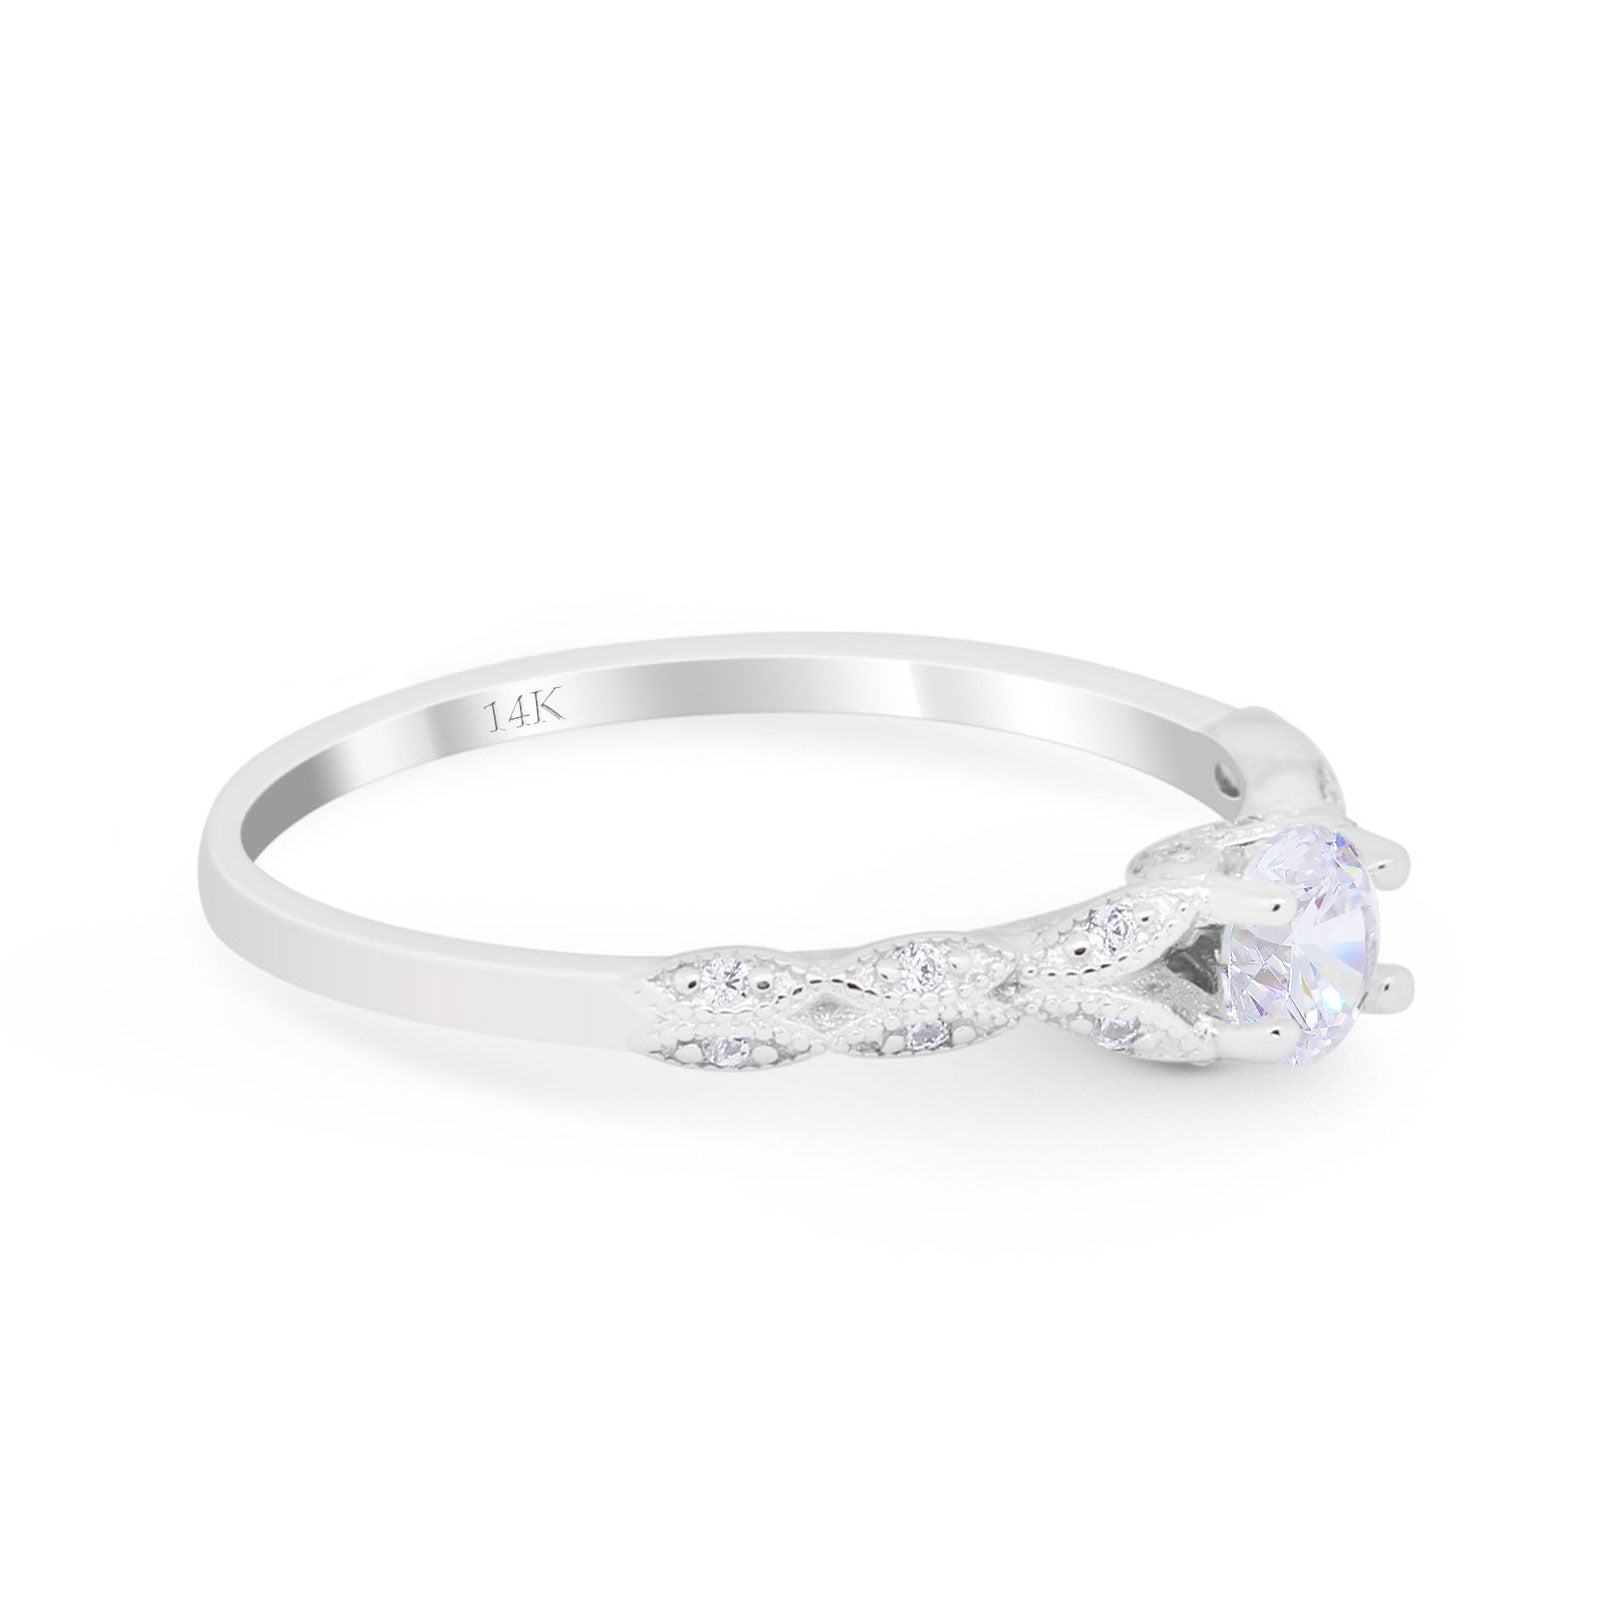 14K Gold Petite Dainty Art Deco Round Shape Simulated Cubic Zirconia Wedding Engagement Ring